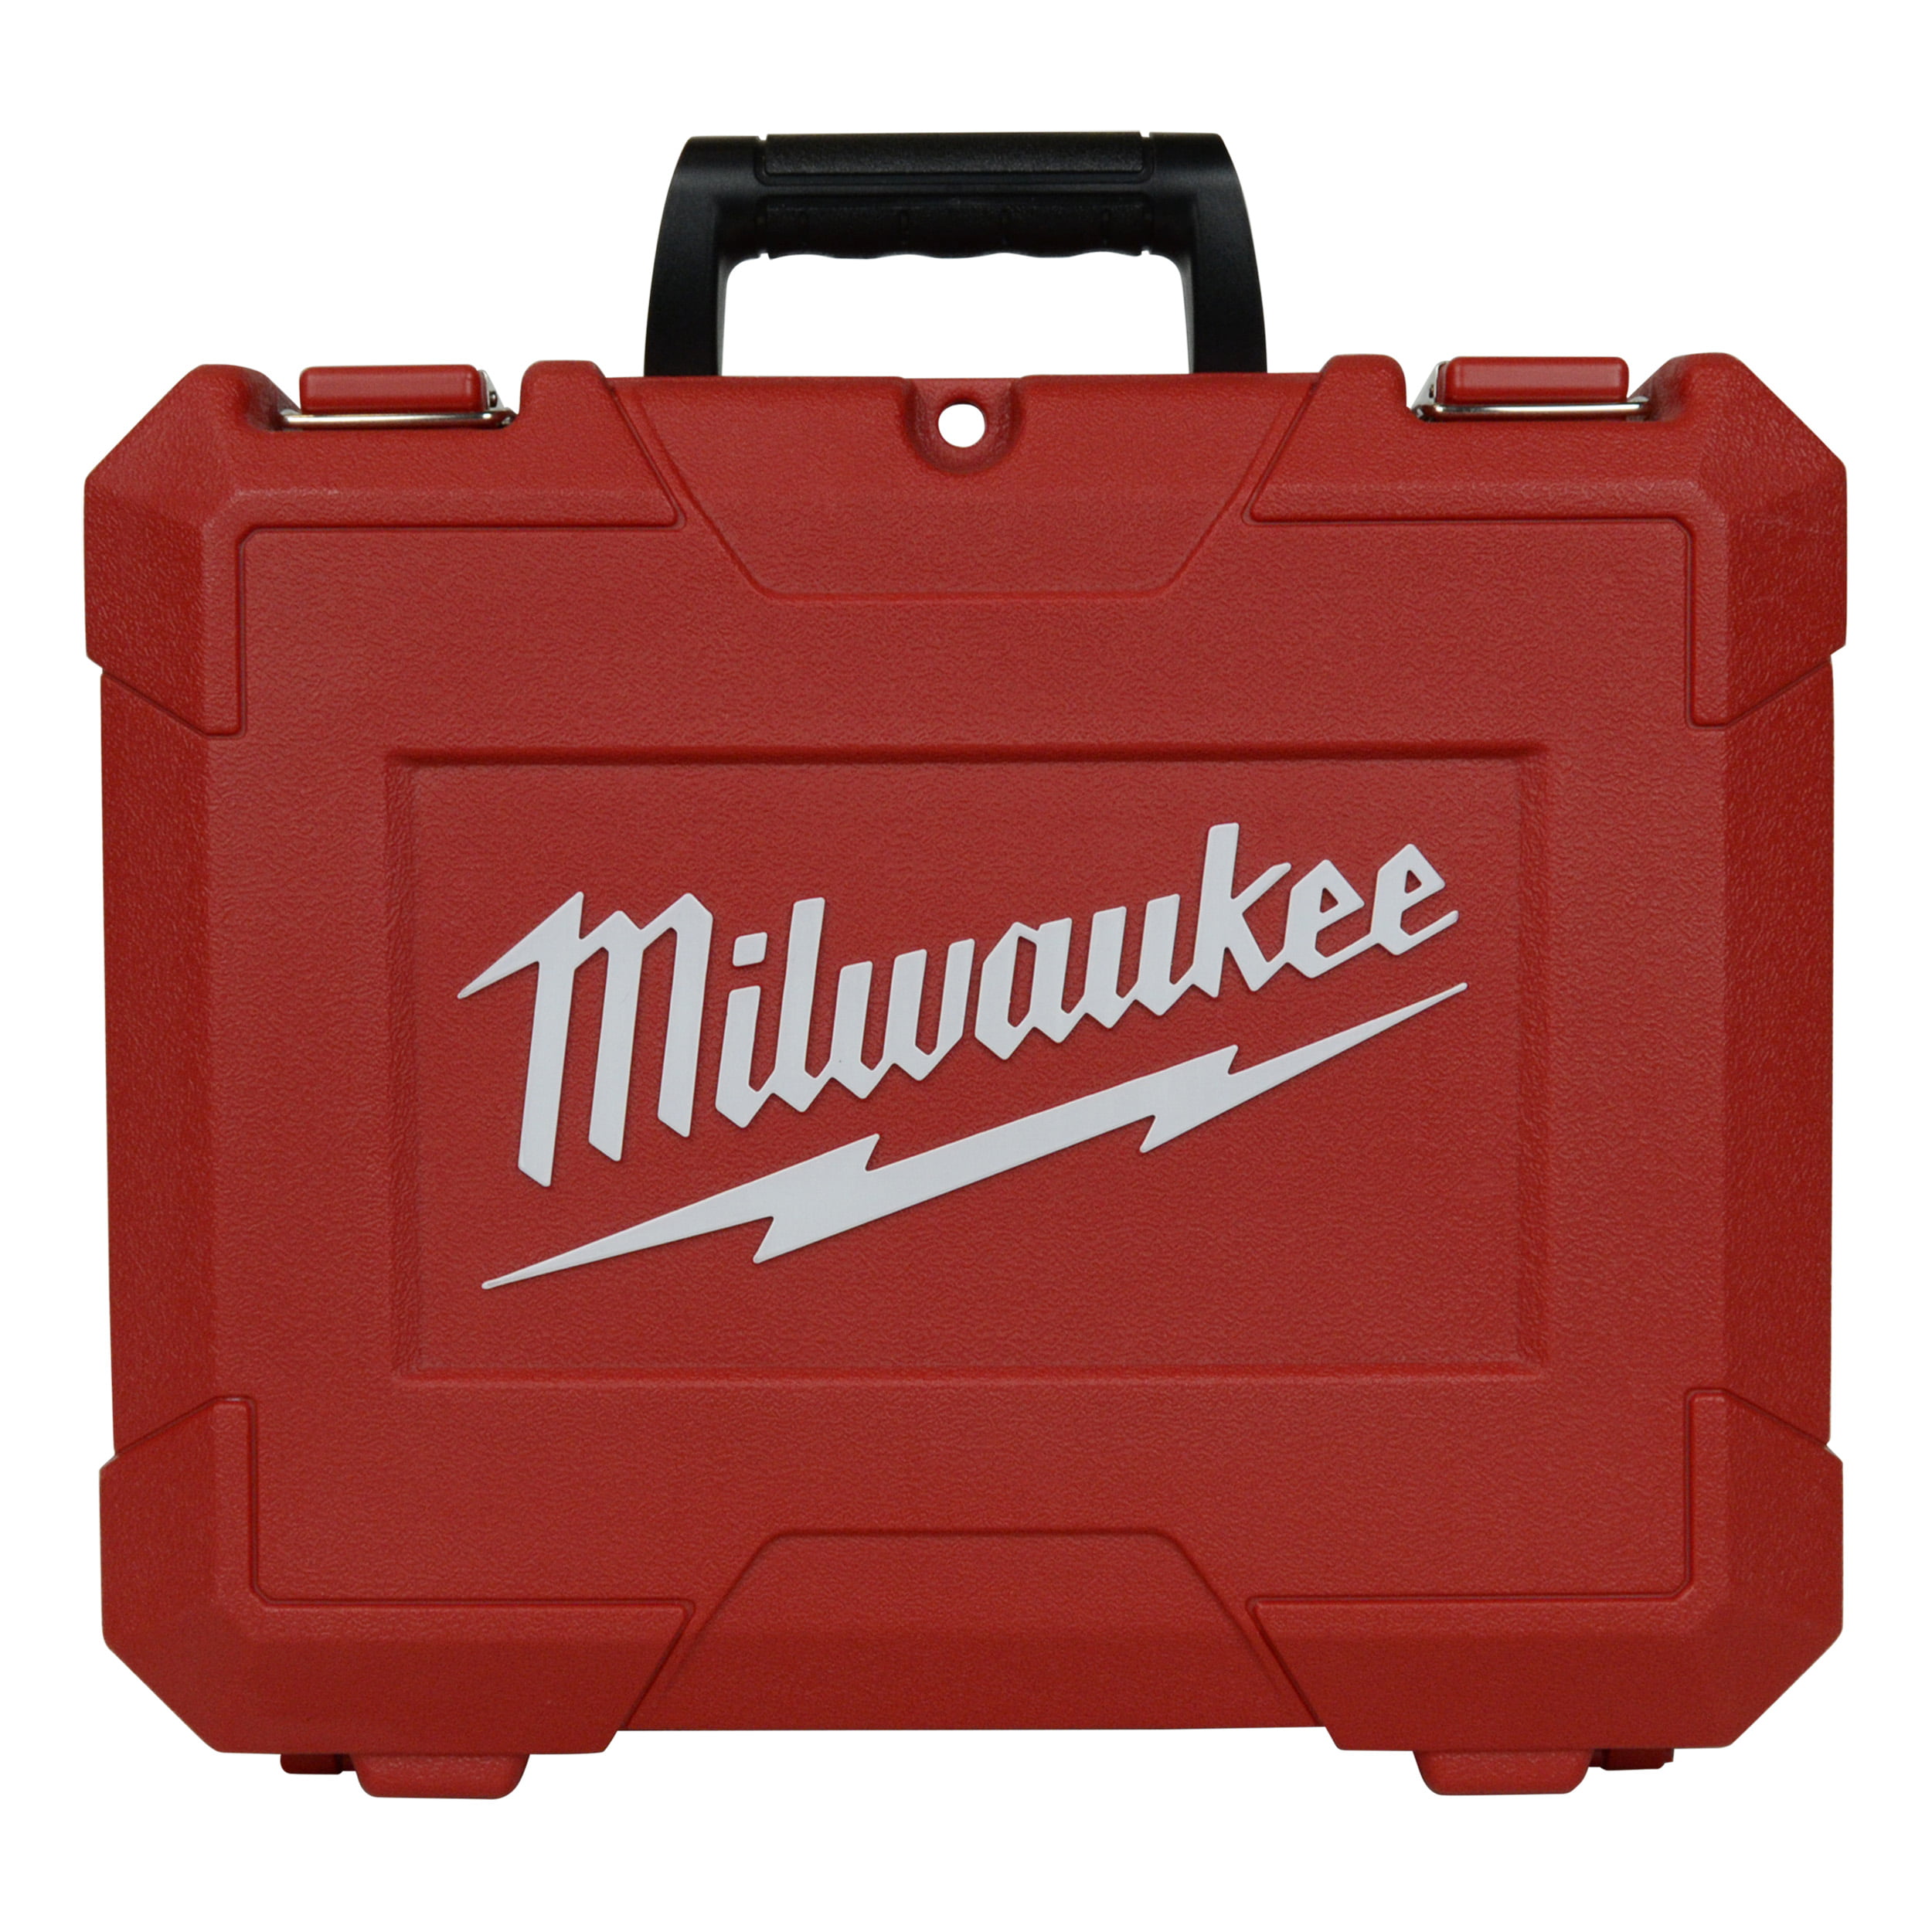 Millwaukee Carrying Case 10-20-2656 